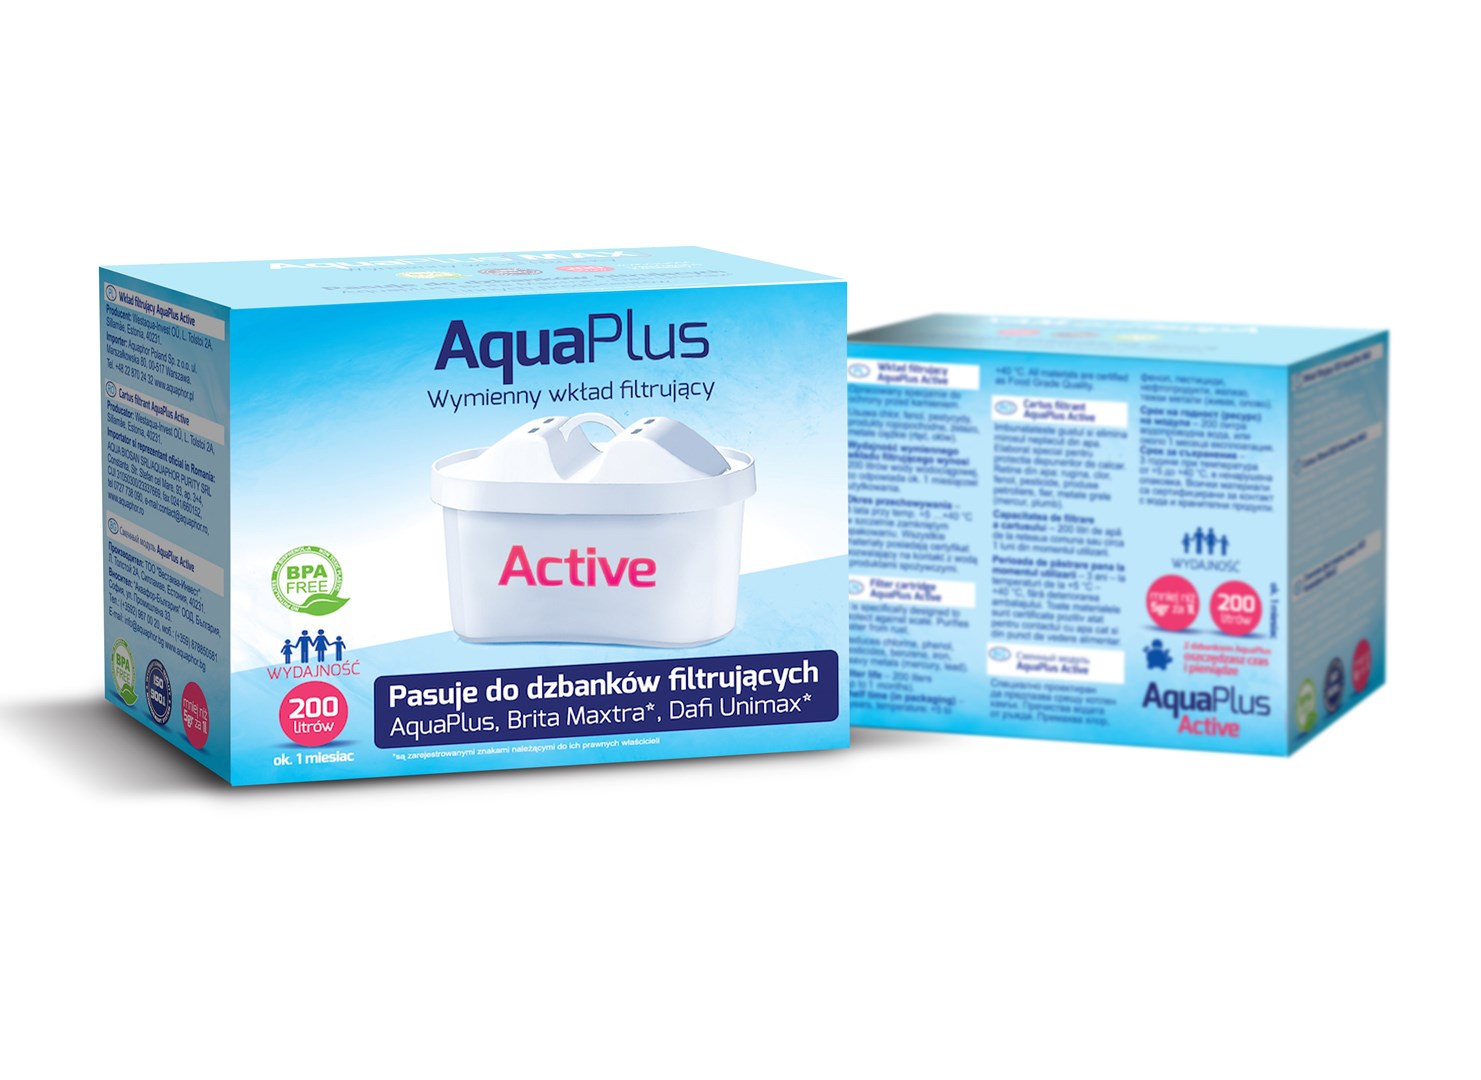 Filter cartridge for Aquaplus Active jug